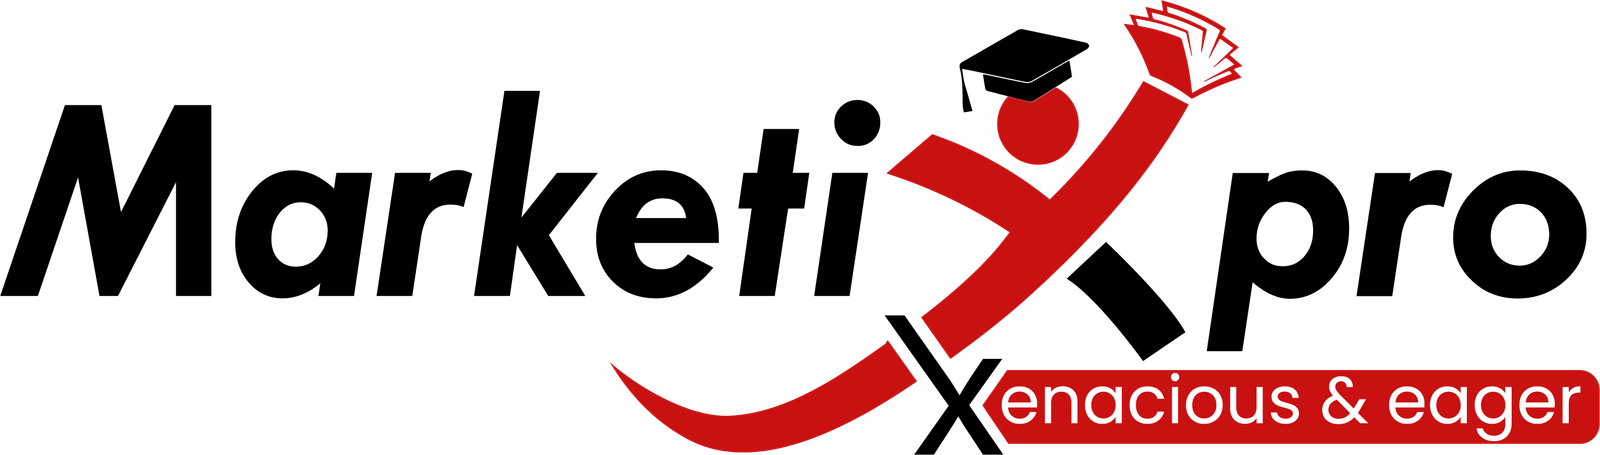 final logo marketixpro logo